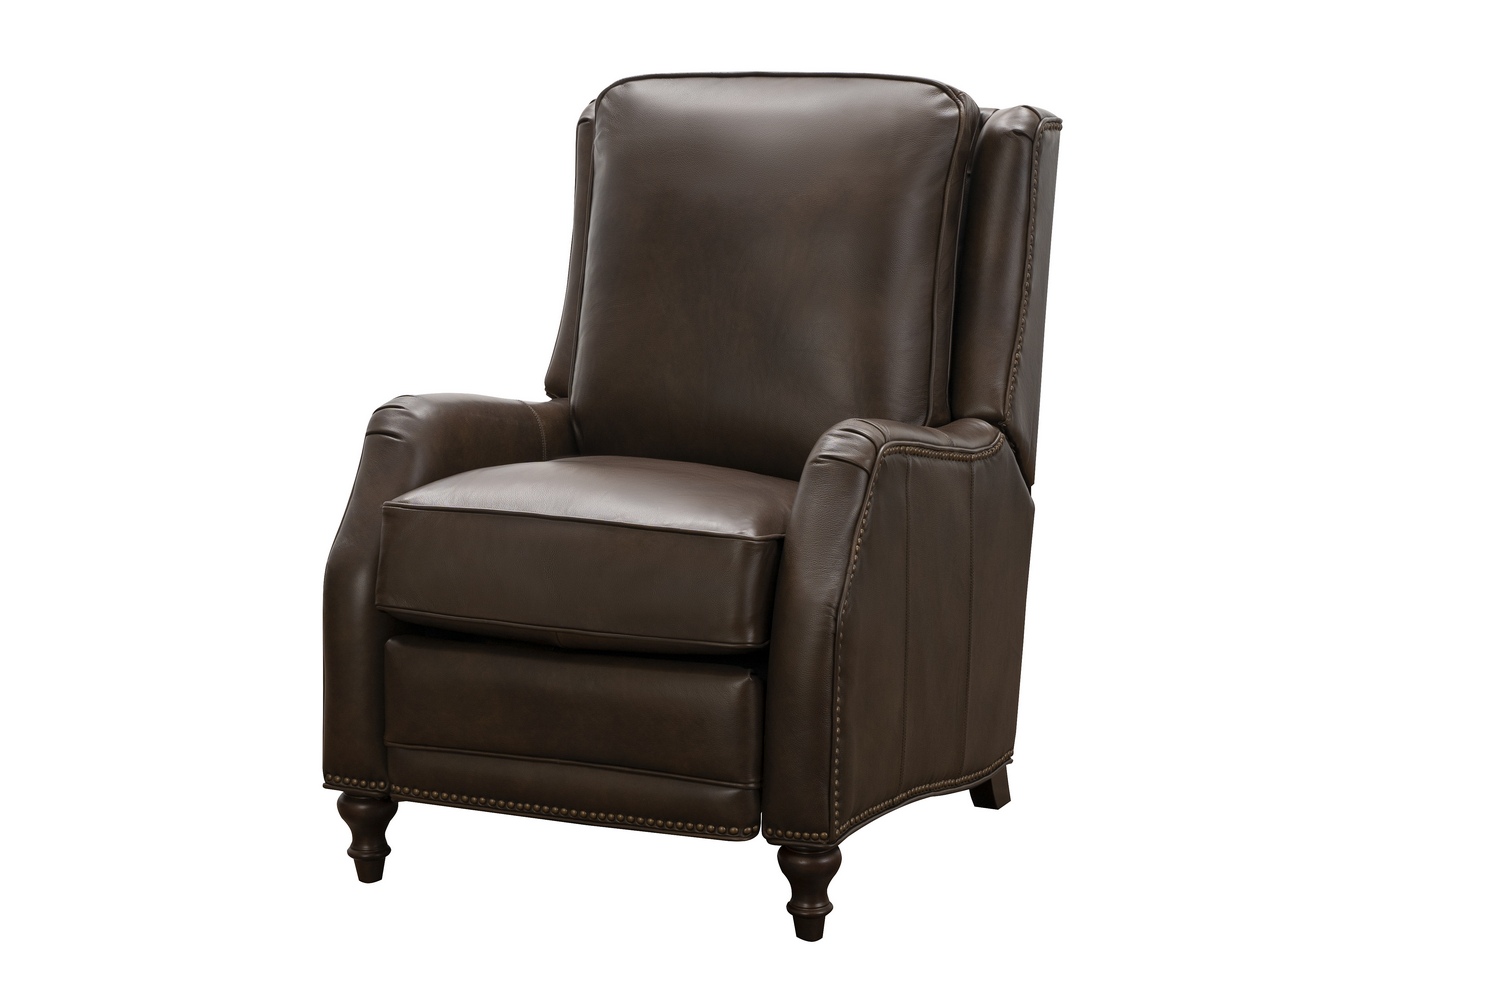 Barcalounger Huntington Power Recliner Chair - Ashford Walnut/All Leather